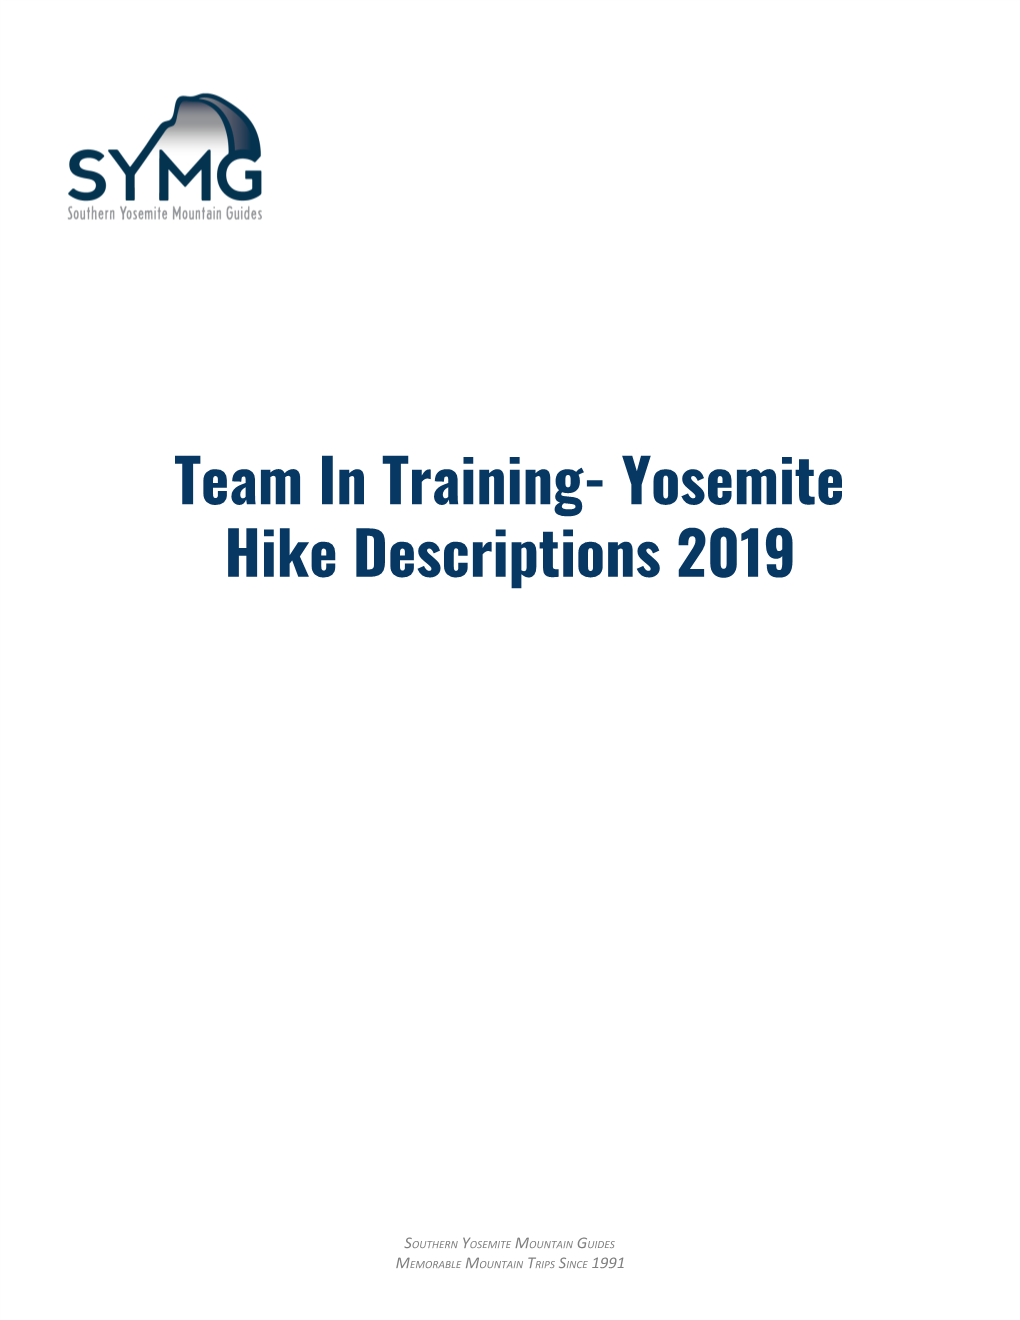 Team in Training- Yosemite Hike Descriptions 2019